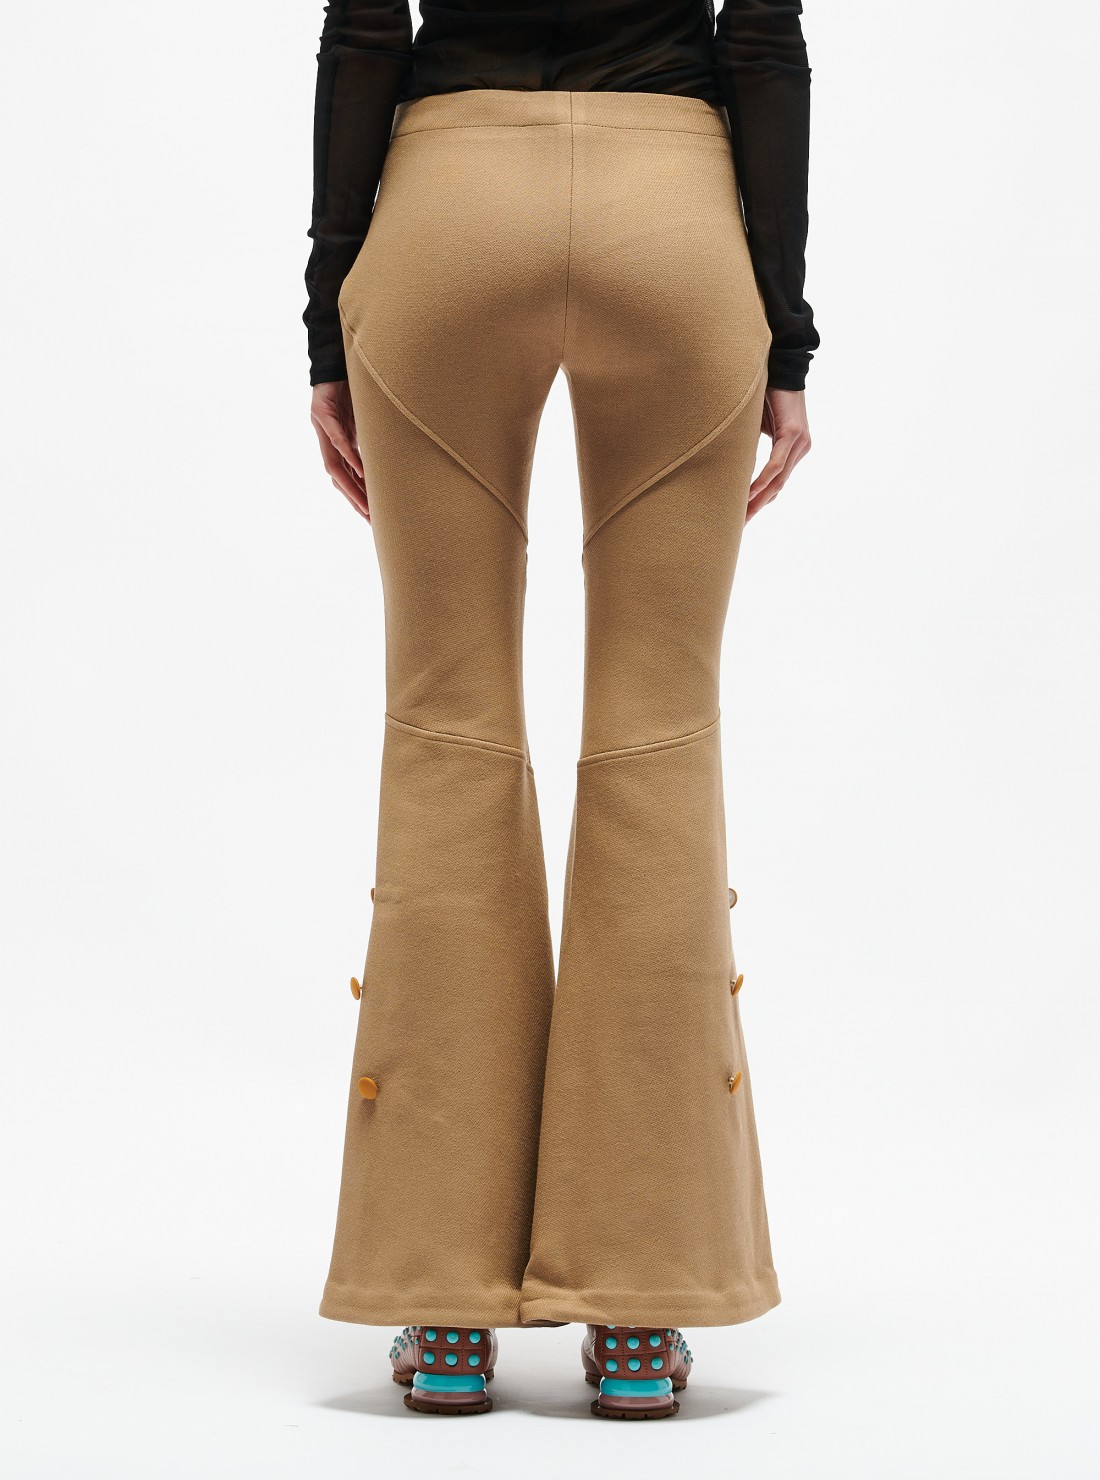 Gellhorn Trousers